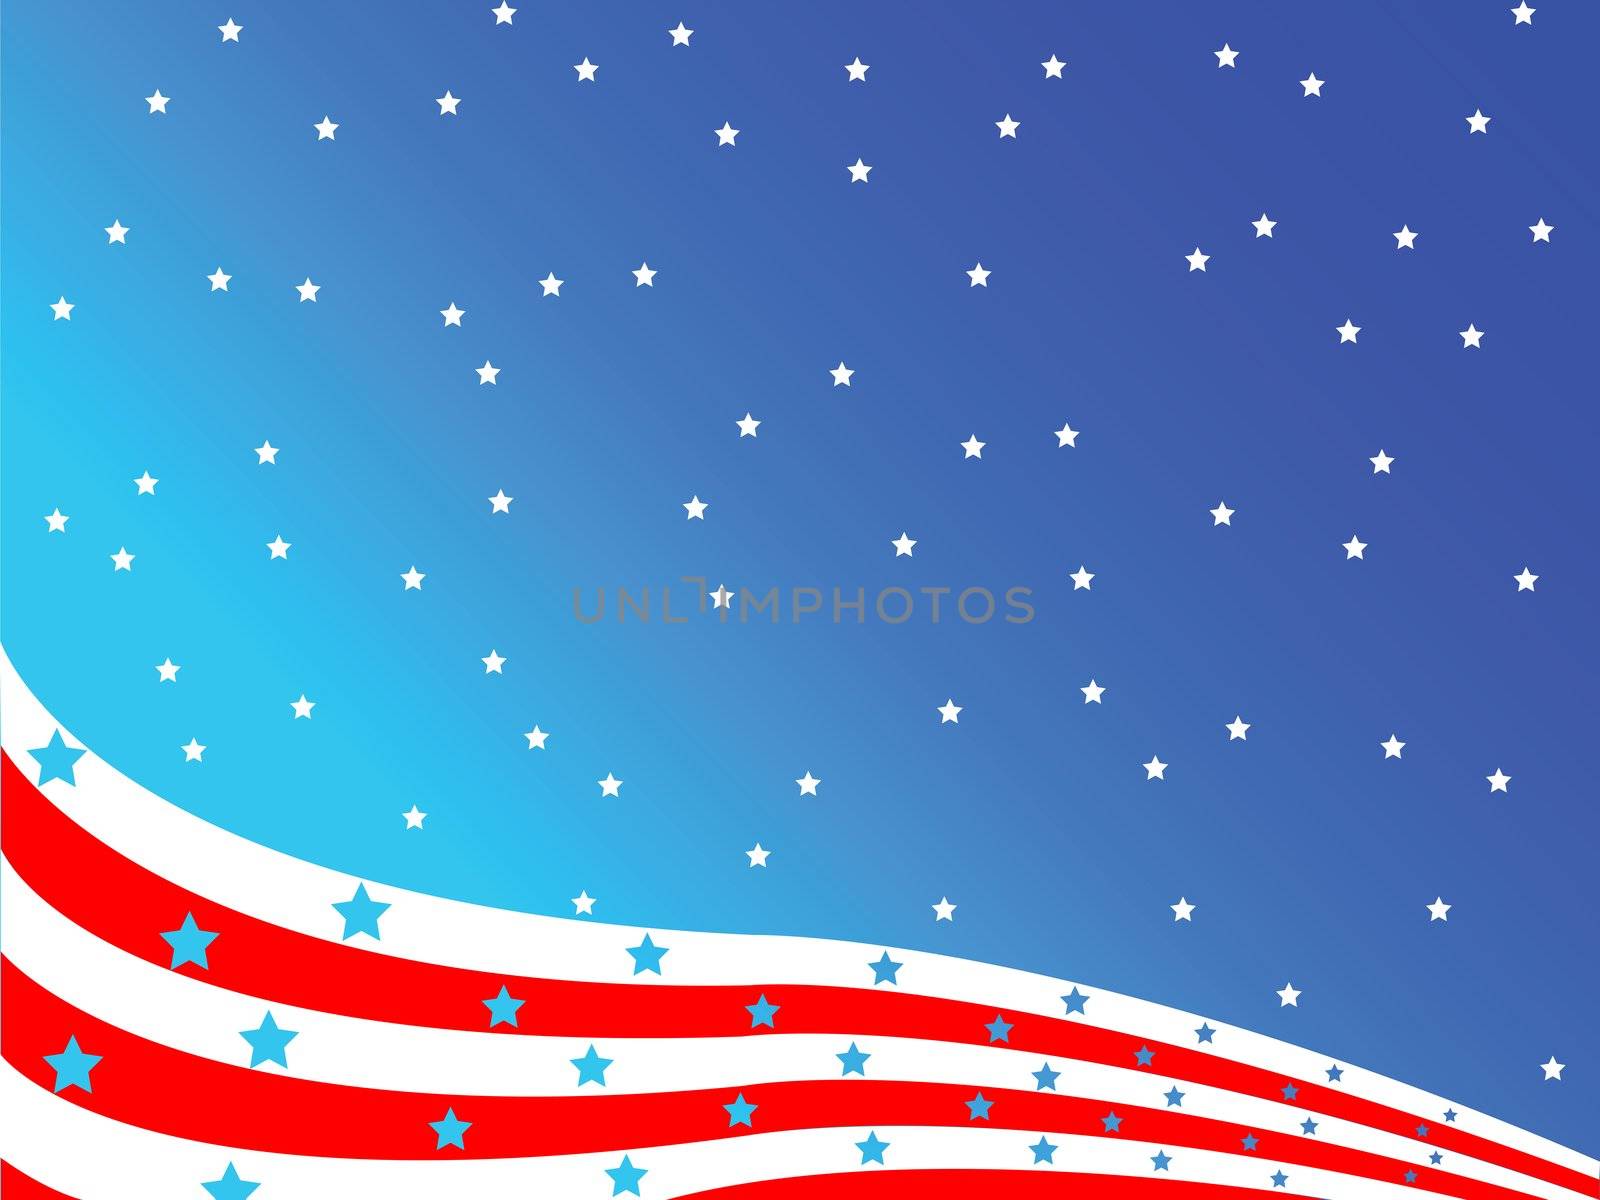 stylized american flag by robertosch